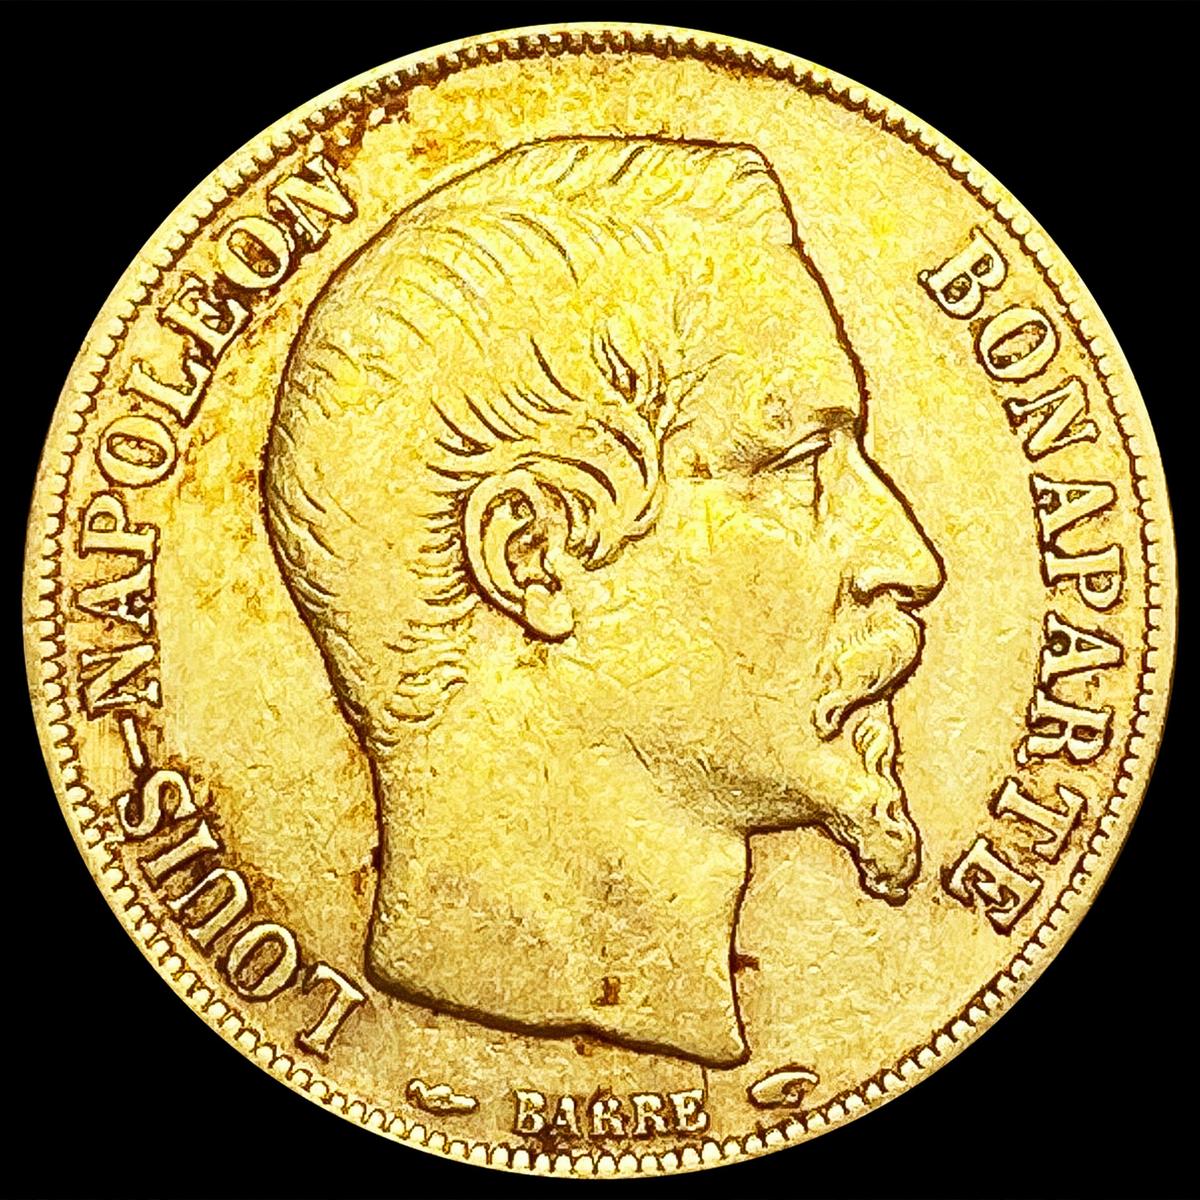 1852-A France .1867oz Gold 20 Francs CLOSELY UNCIR